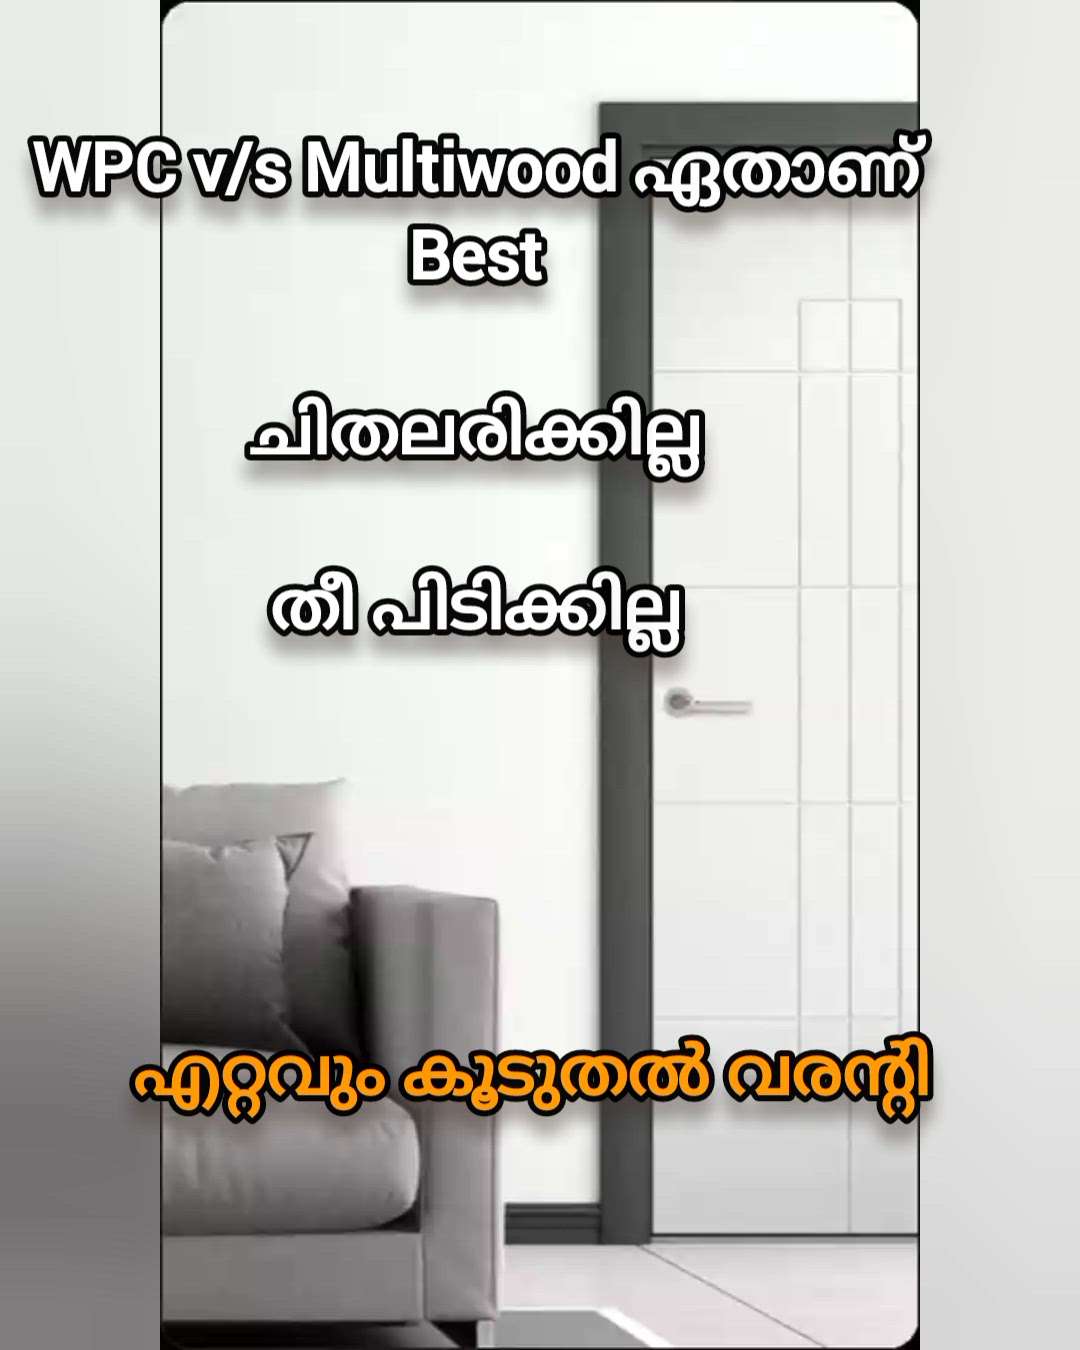 #creatorsofkolo #alternatives #wood #wpc #multiwood #KitchenIdeas  #DoorDesigns  #KitchenRenovation  #KitchenCabinet  #WindowsIdeas  #furnitures